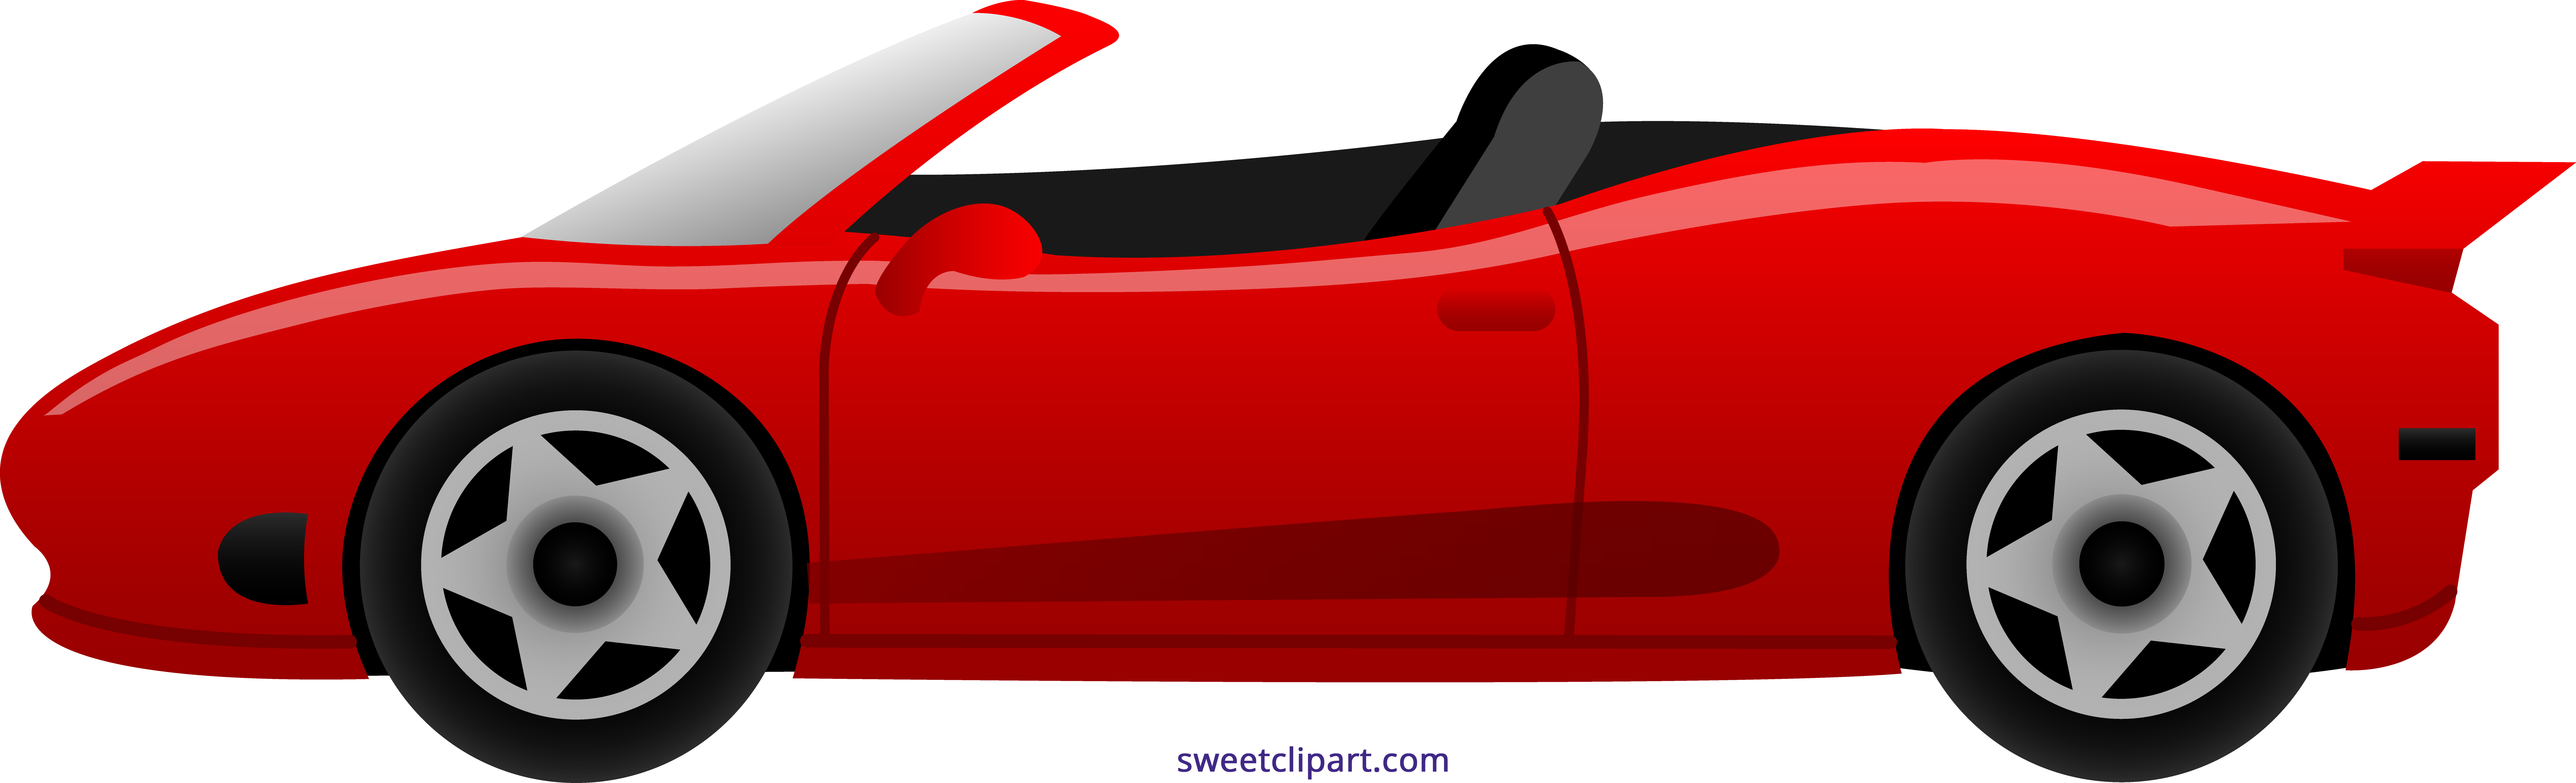 red car clip art